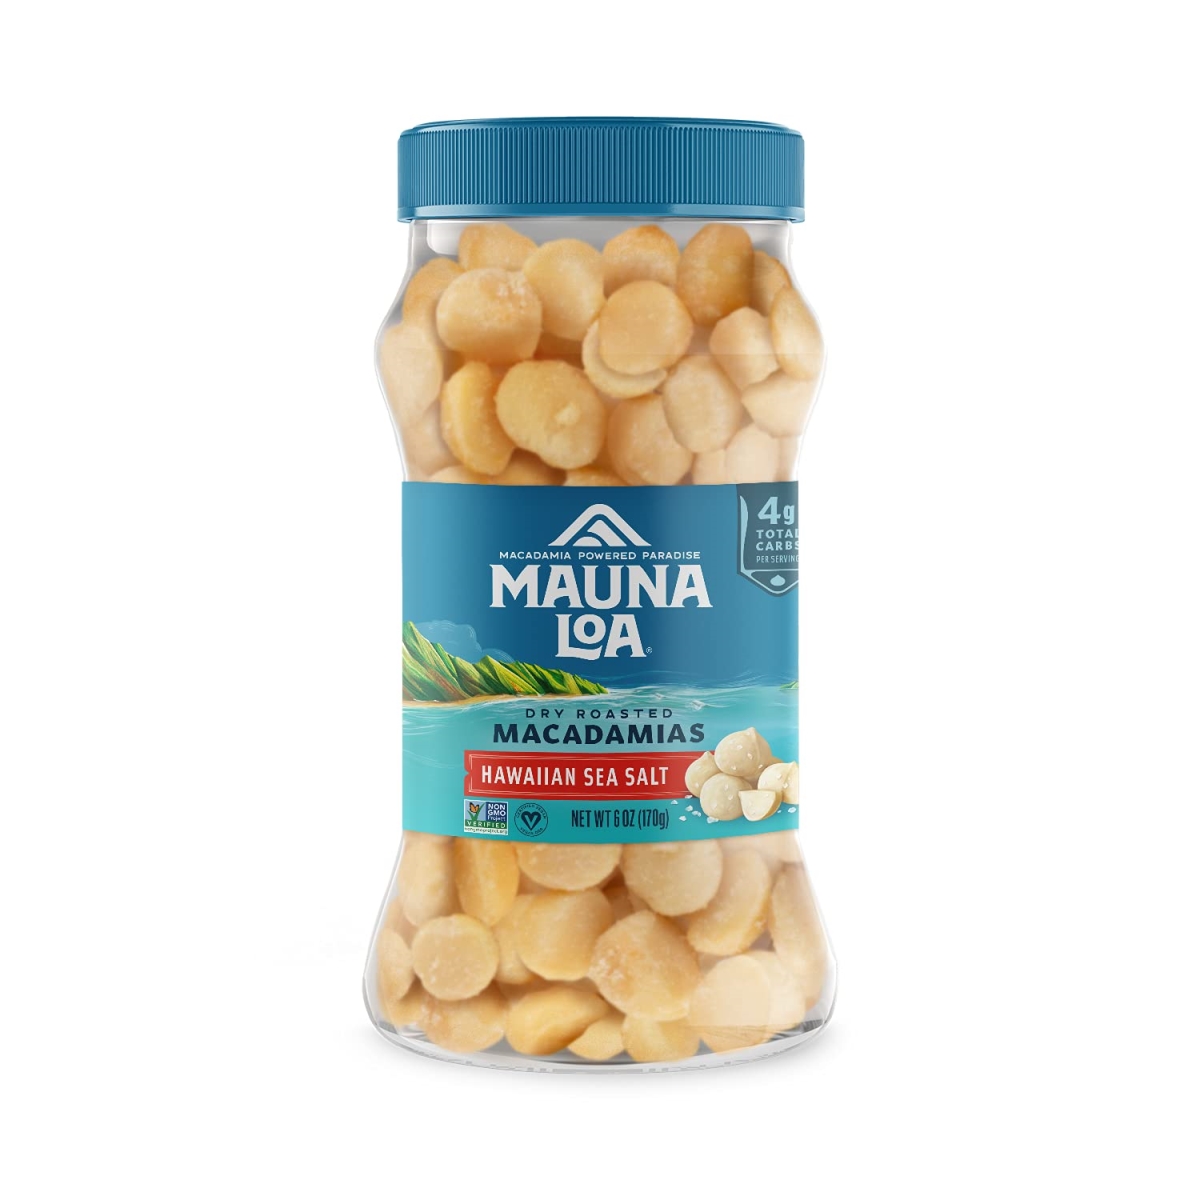 392643 6 oz Premium Hawaiian Sea Salt Macadamia Nuts, Pack of 12 -  Mauna Loa